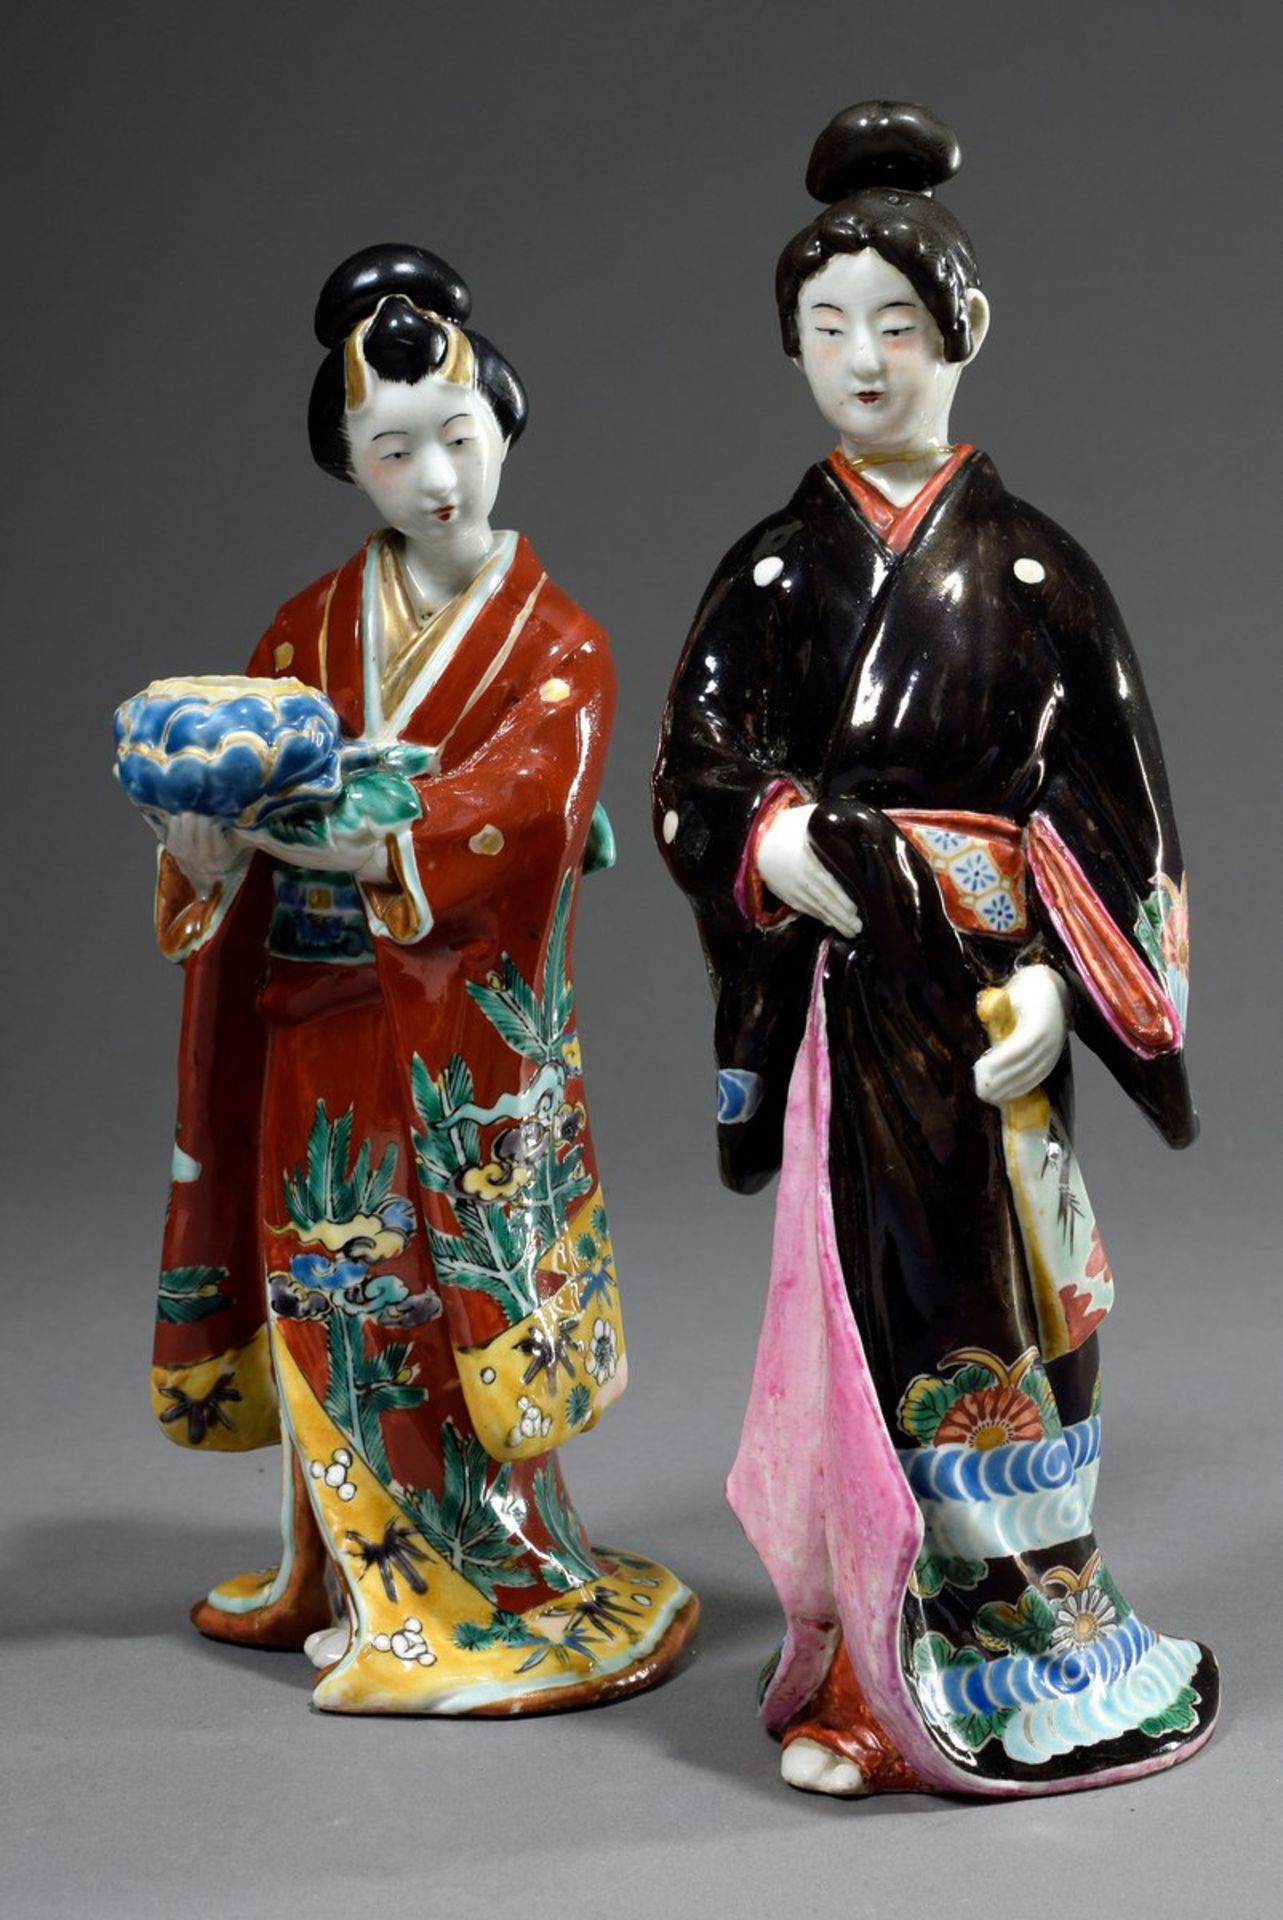 2 Kutani Porzellanfiguren "Damen in traditionellem Gewand", Japan um 1910, H. 26/28cm, 1x defekt2